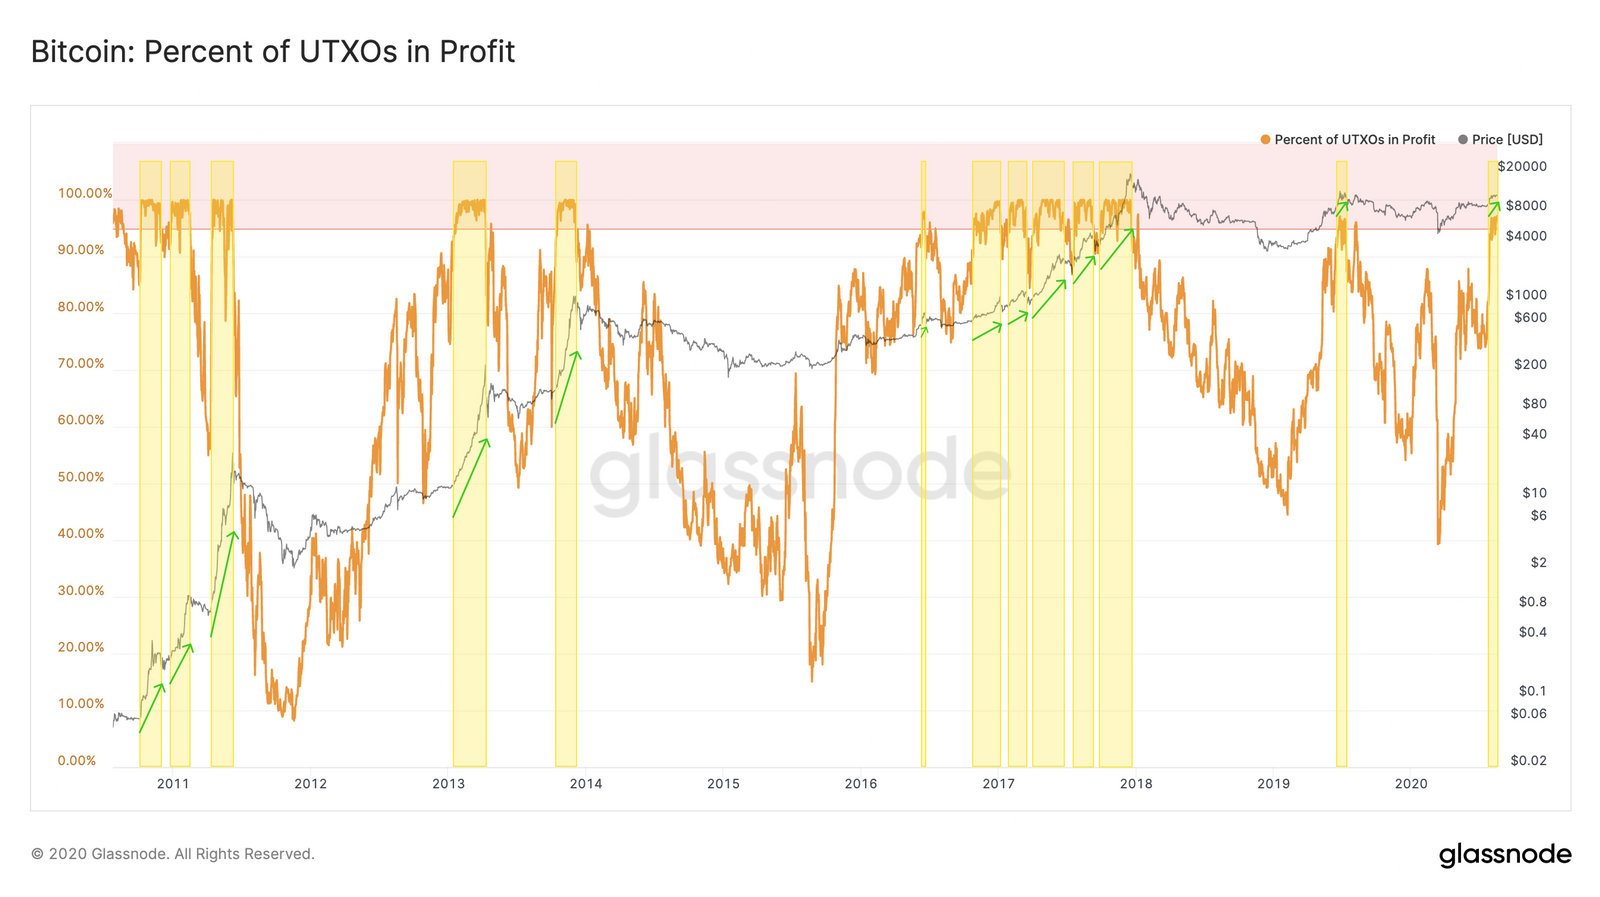 Bitcoin UTXO profitability chart